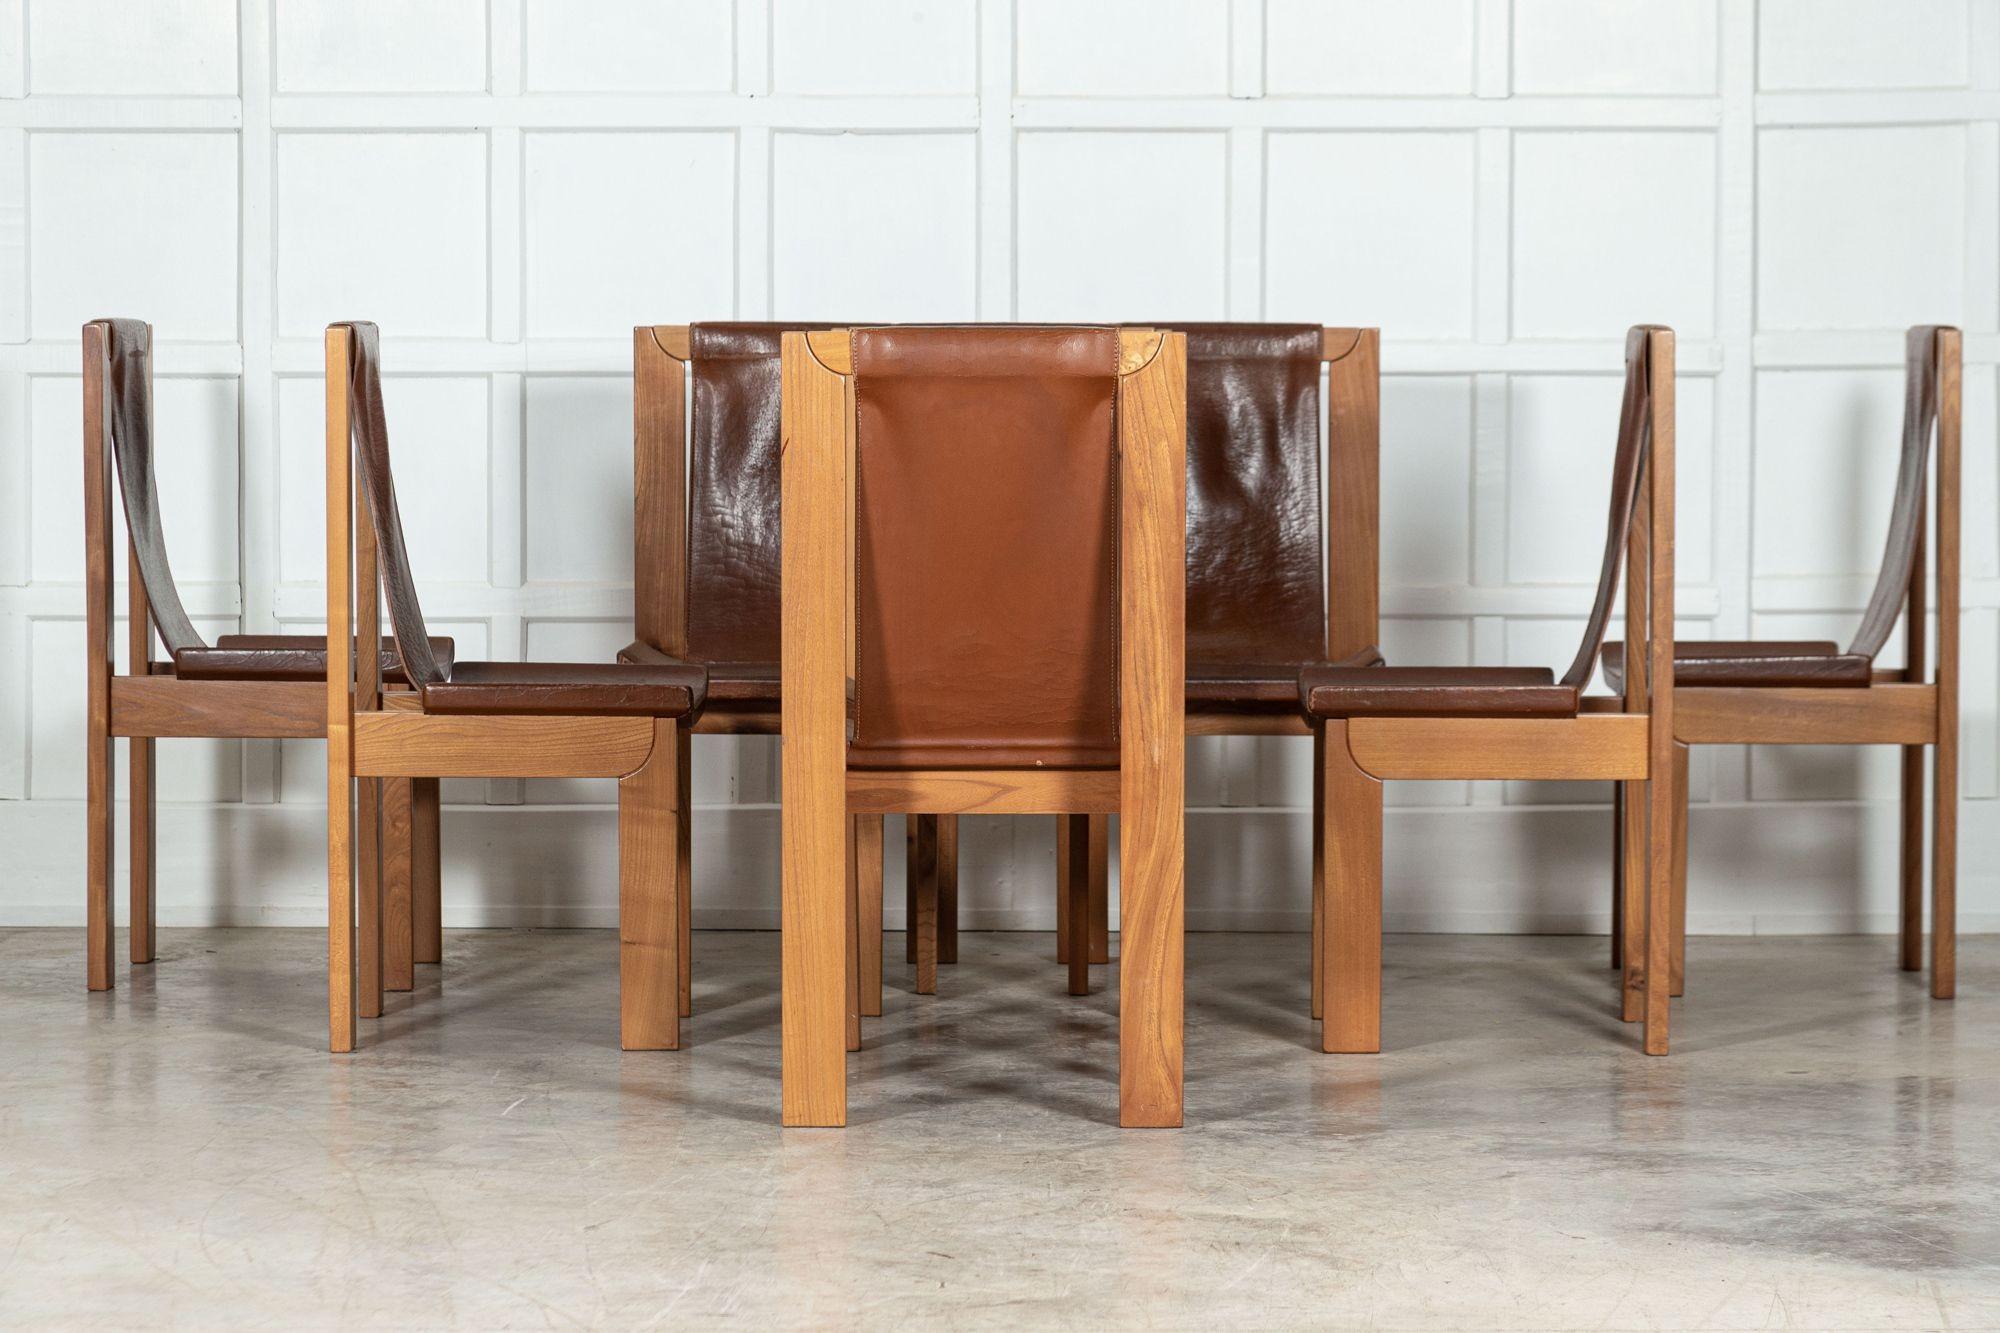 circa 1980
Set 8 French Roland Haeusler For Maison Regain Elm & Leather Brutalist Chairs
sku 1445
W51 x D47 x H100 cm
Seat height 48 cm.